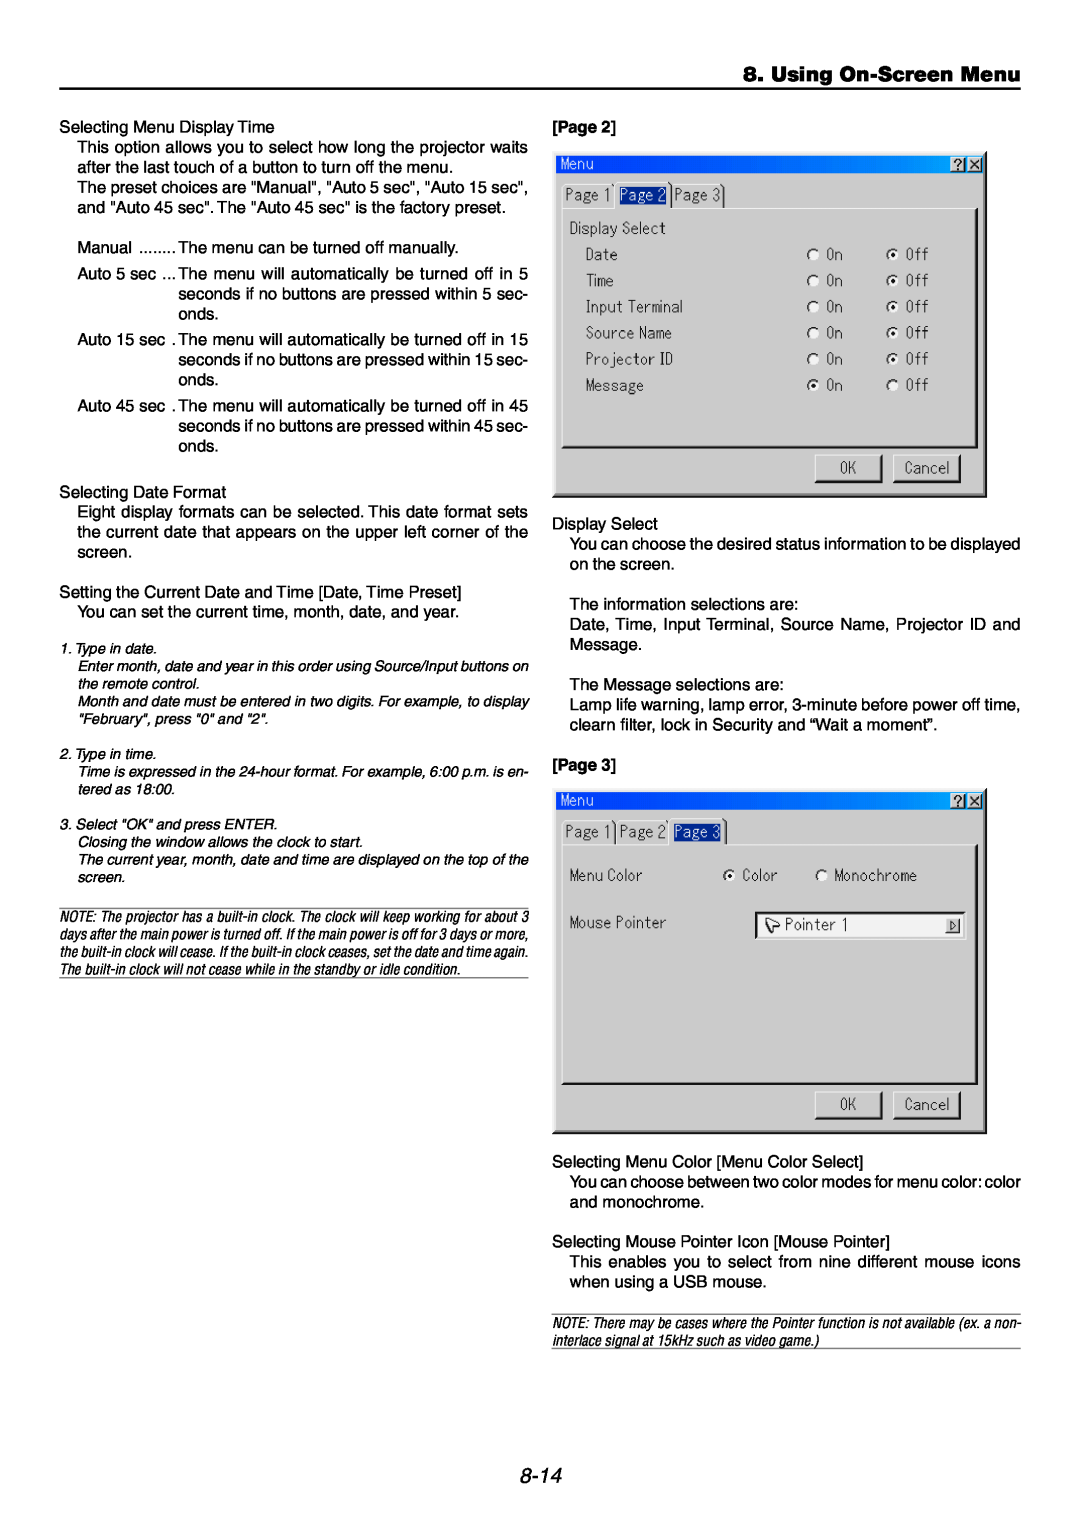 NEC GT6000 user manual Using On-ScreenMenu, 8-14, Selecting Menu Display Time, Page 